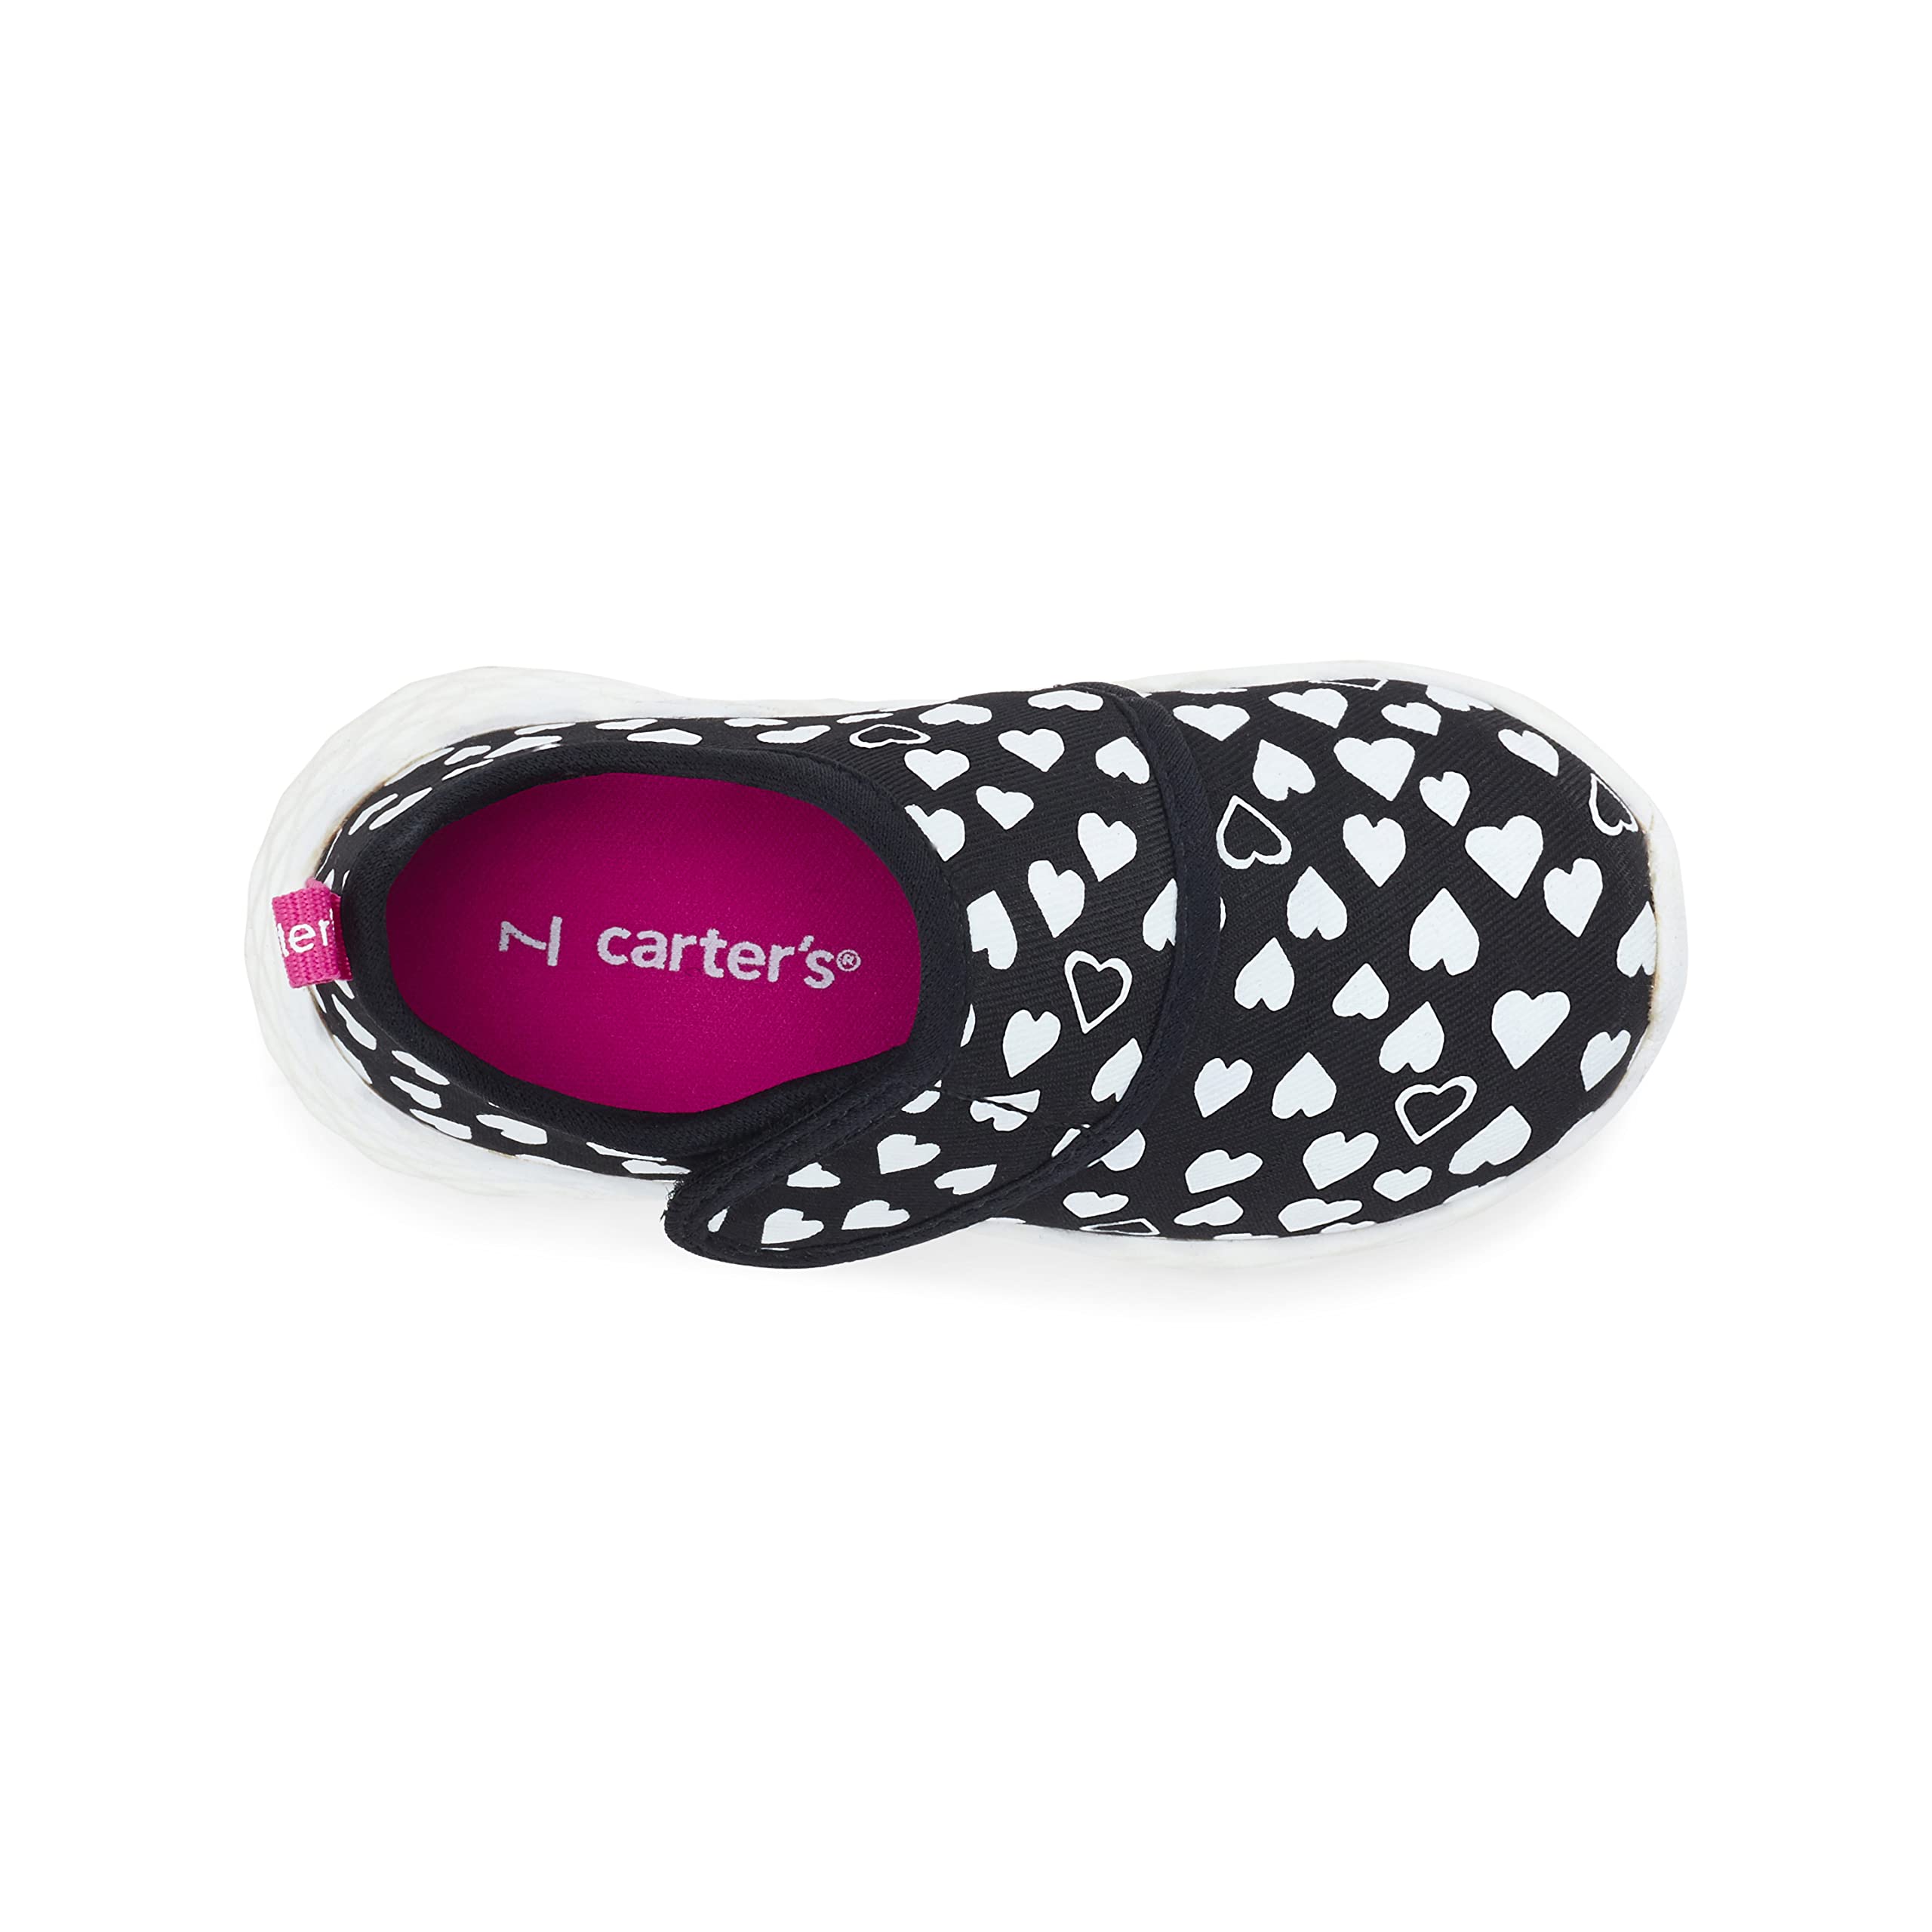 Carter's Unisex-Child Lorena Sneaker